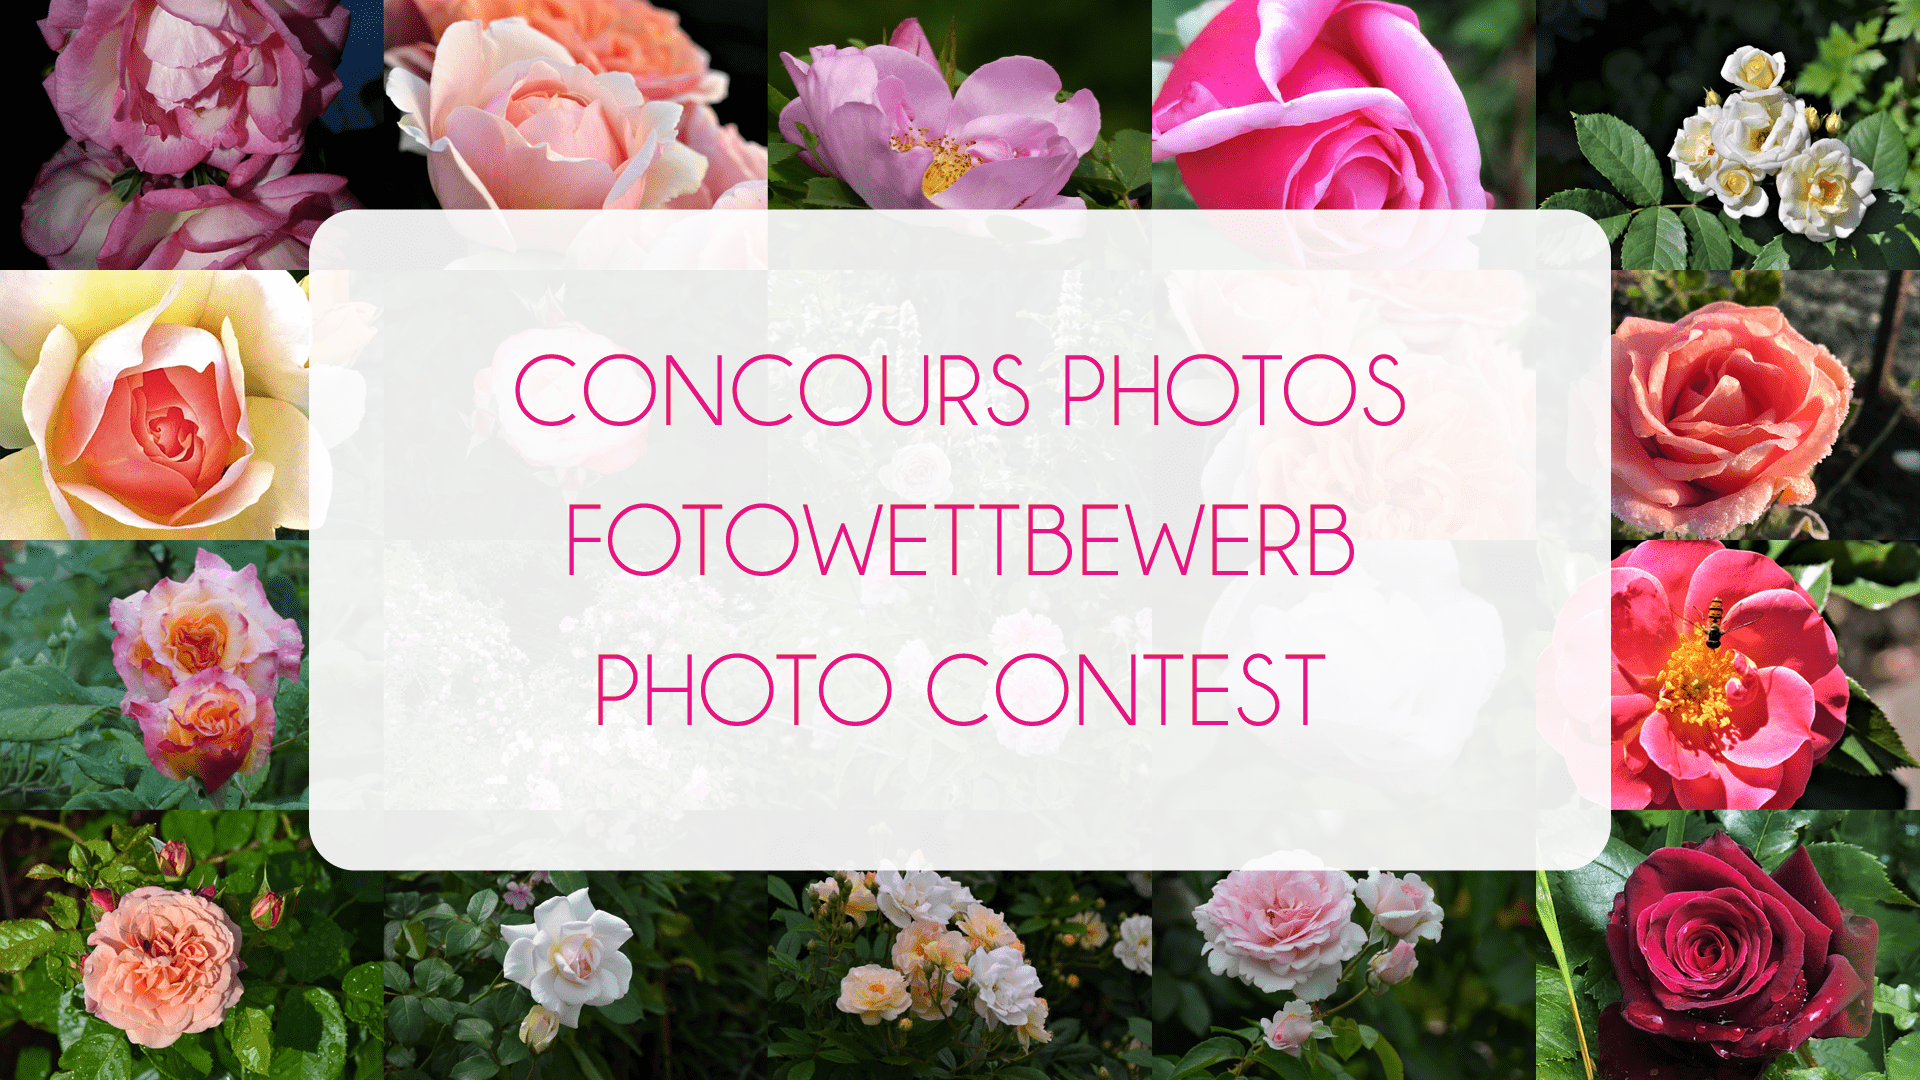 Fotowettbewerb - Concours Photos